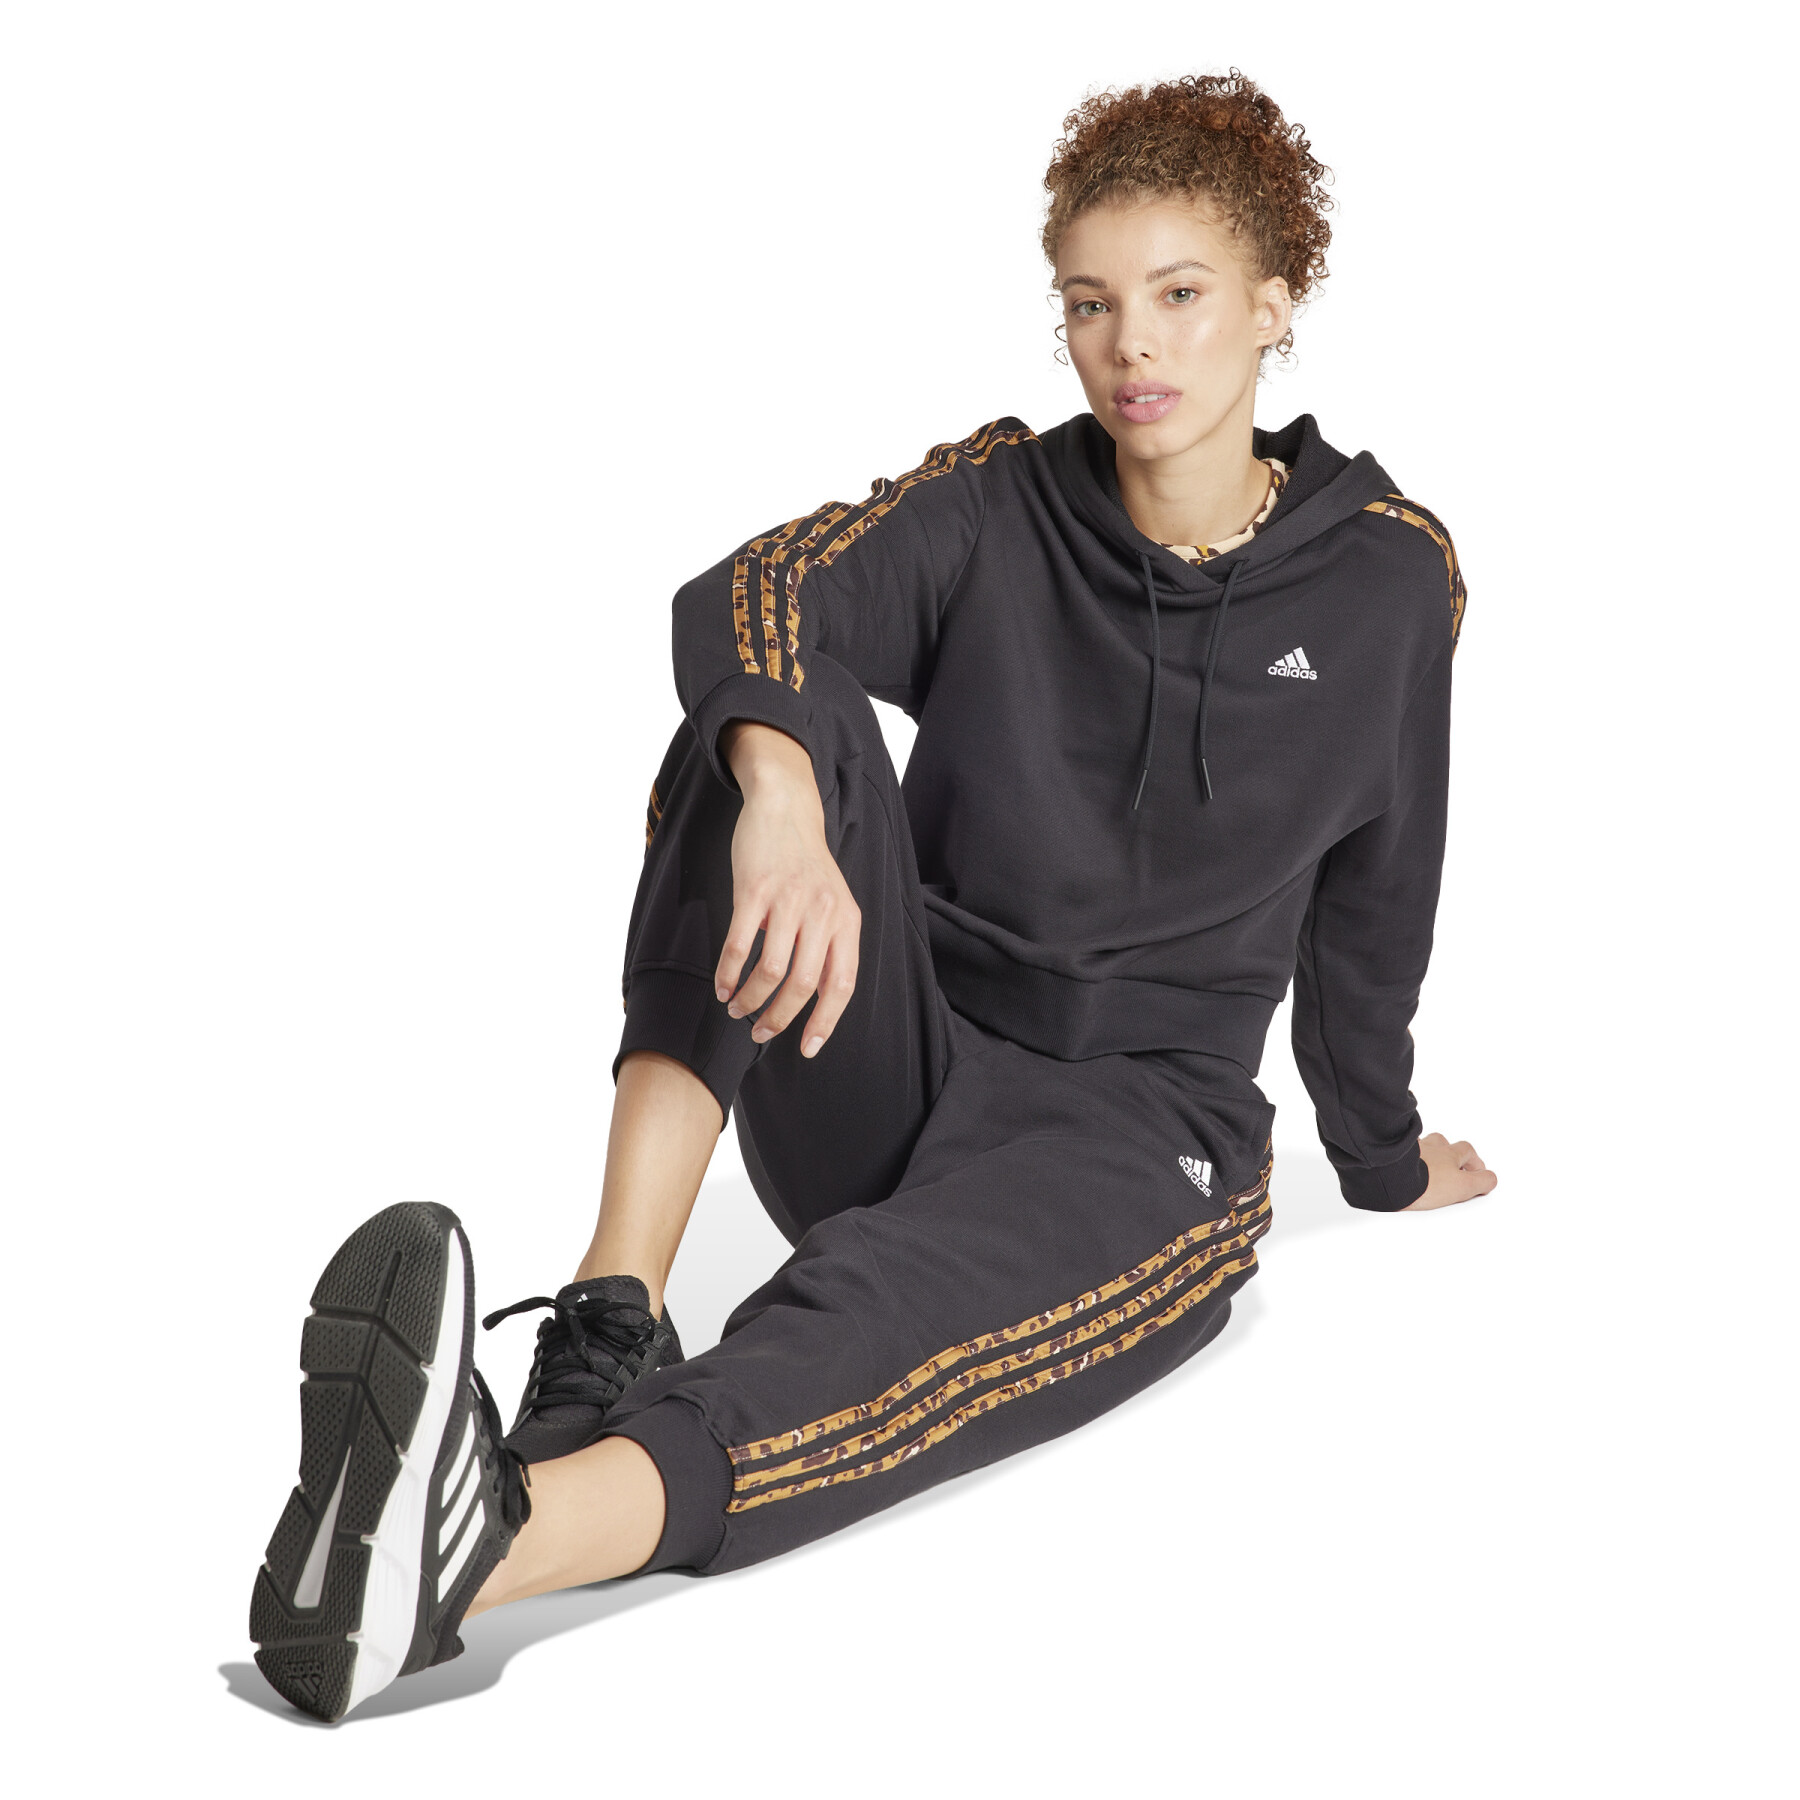 Women's 7/8 animal print jogging suit adidas Essentials 3-Stripes